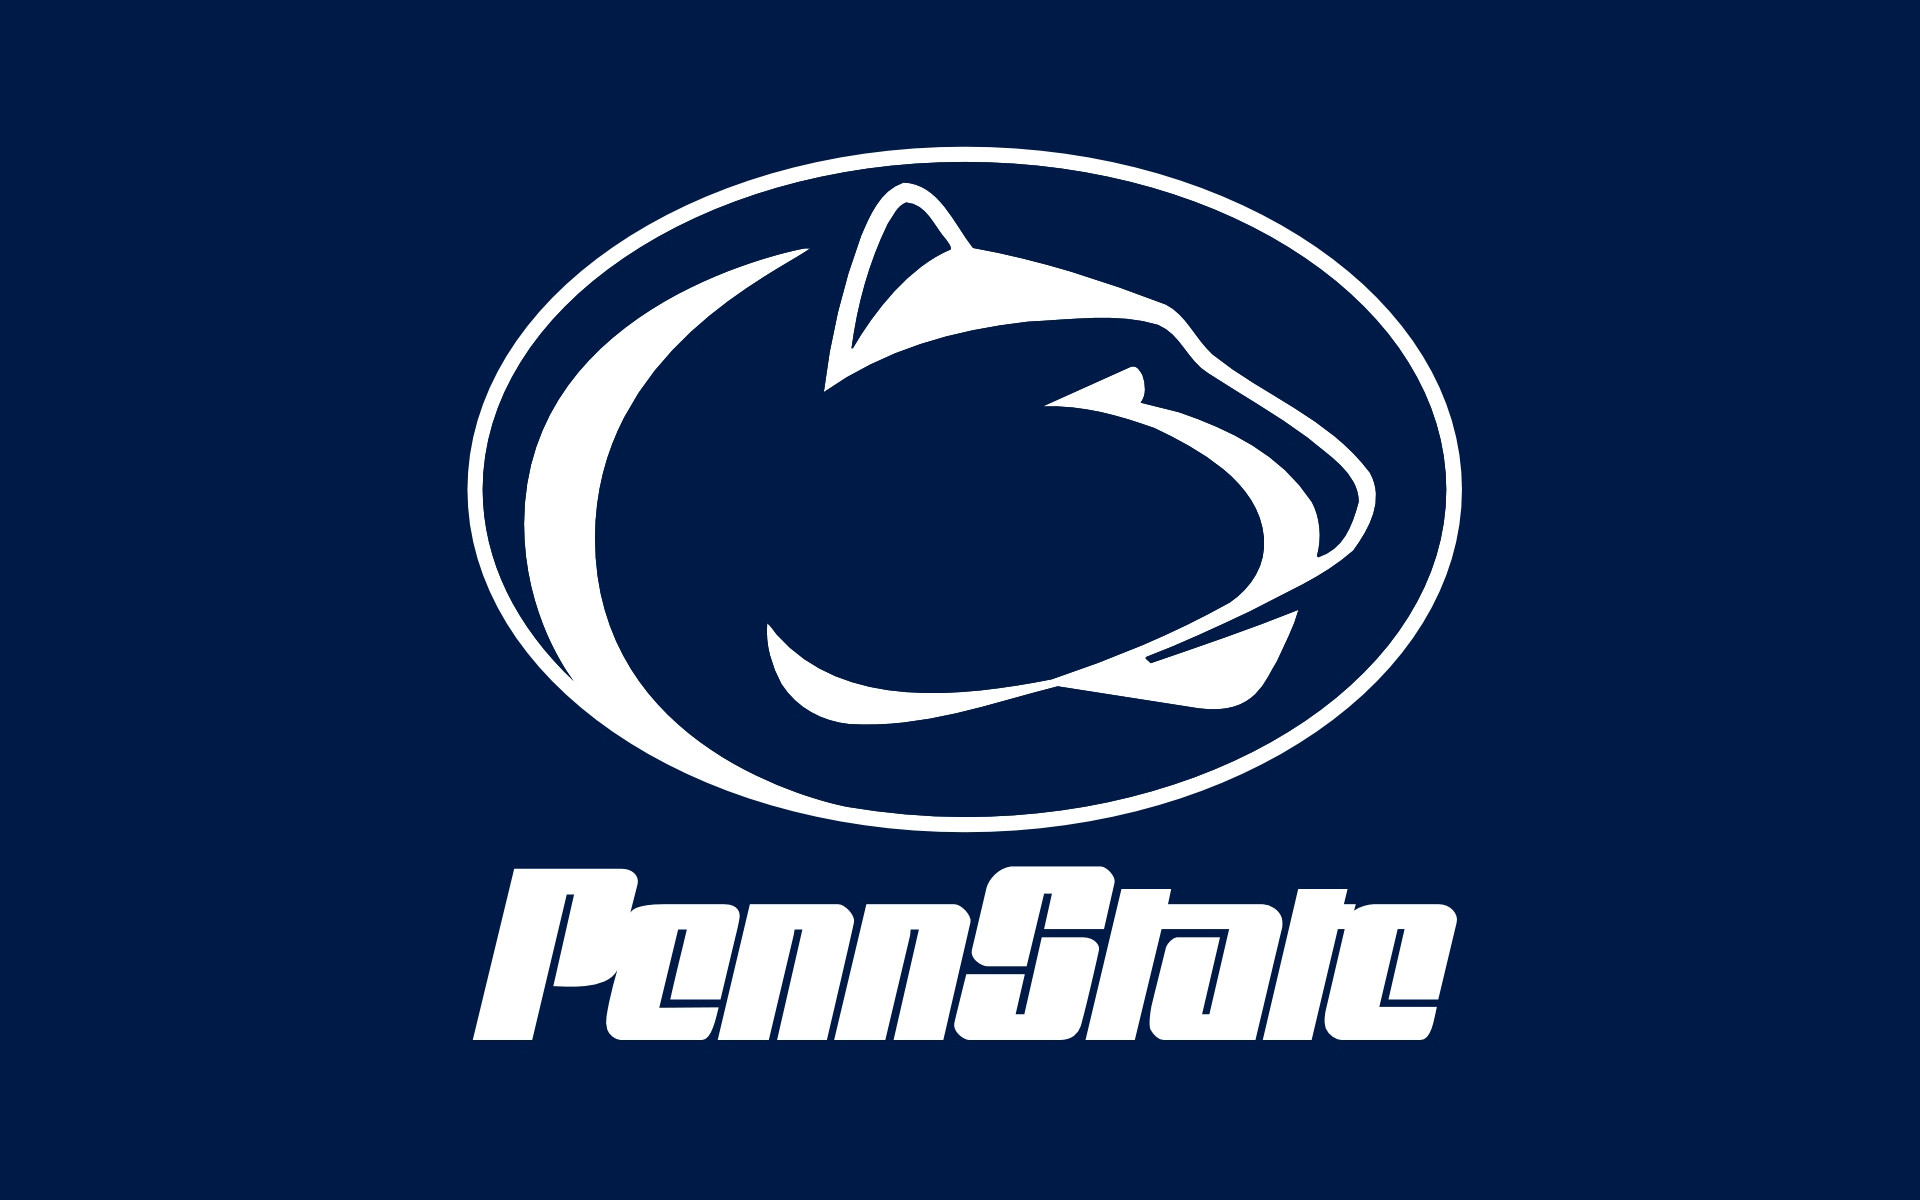 Penn State Football Wallpaper (75+ images)